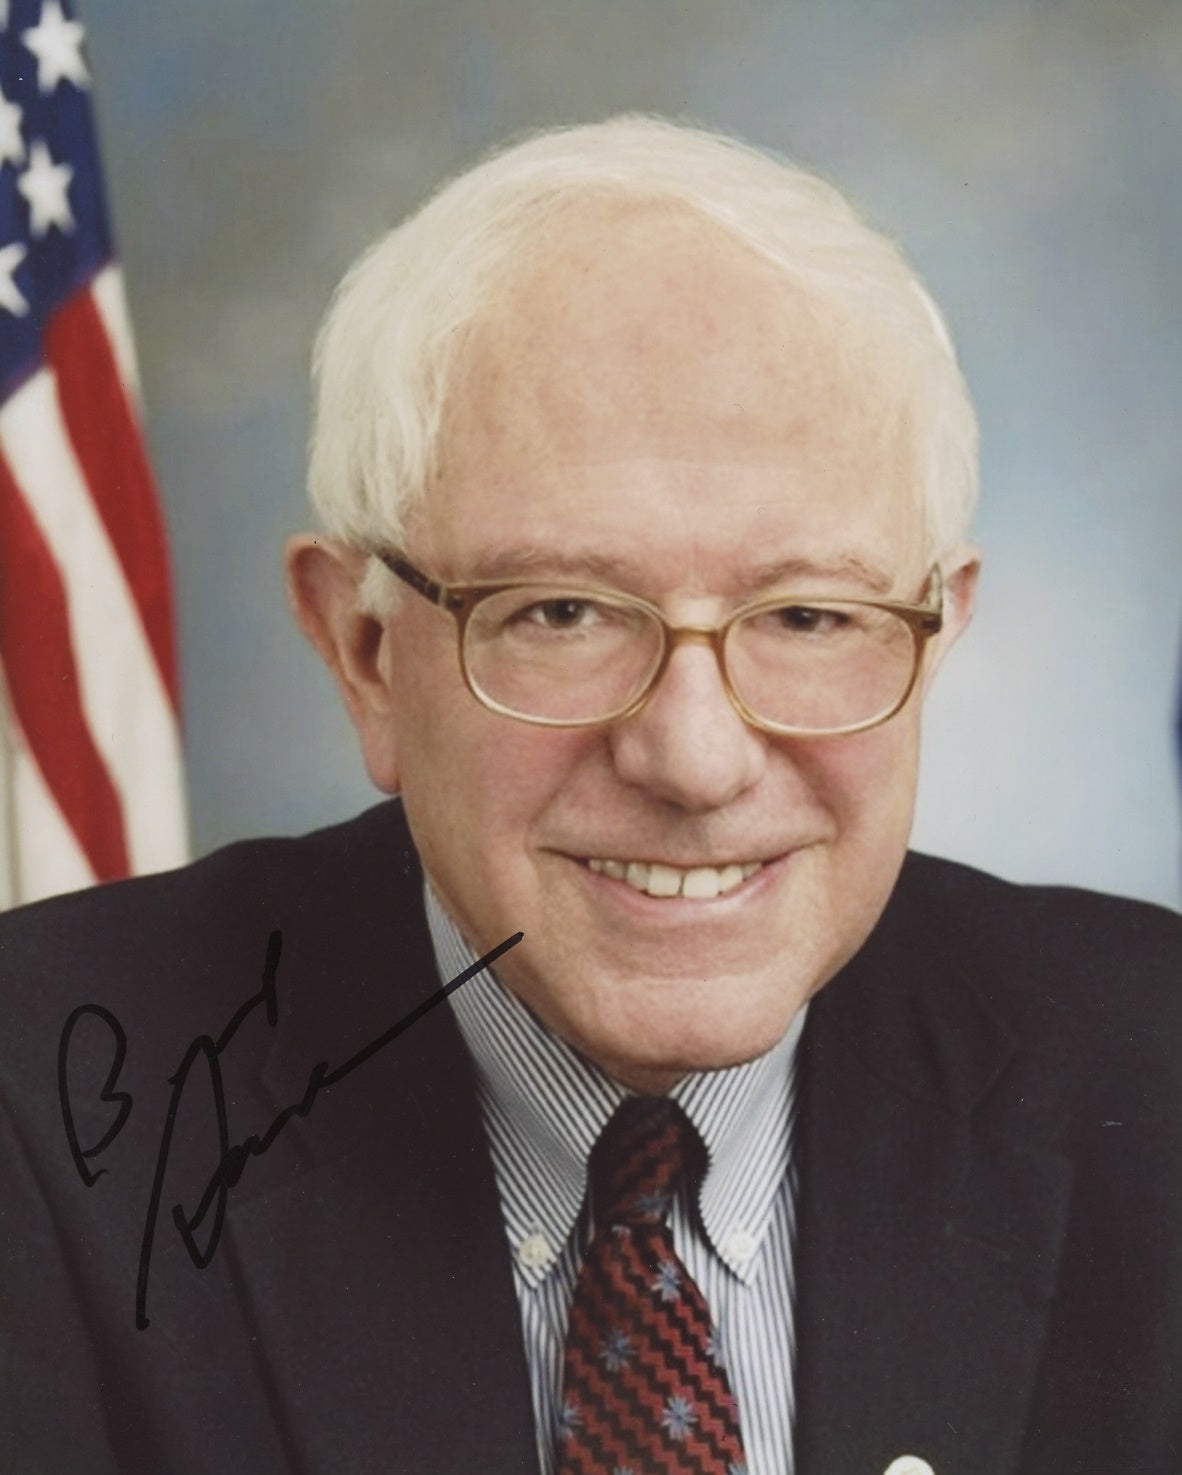 Bernie Sanders Signed 8x10 Photo